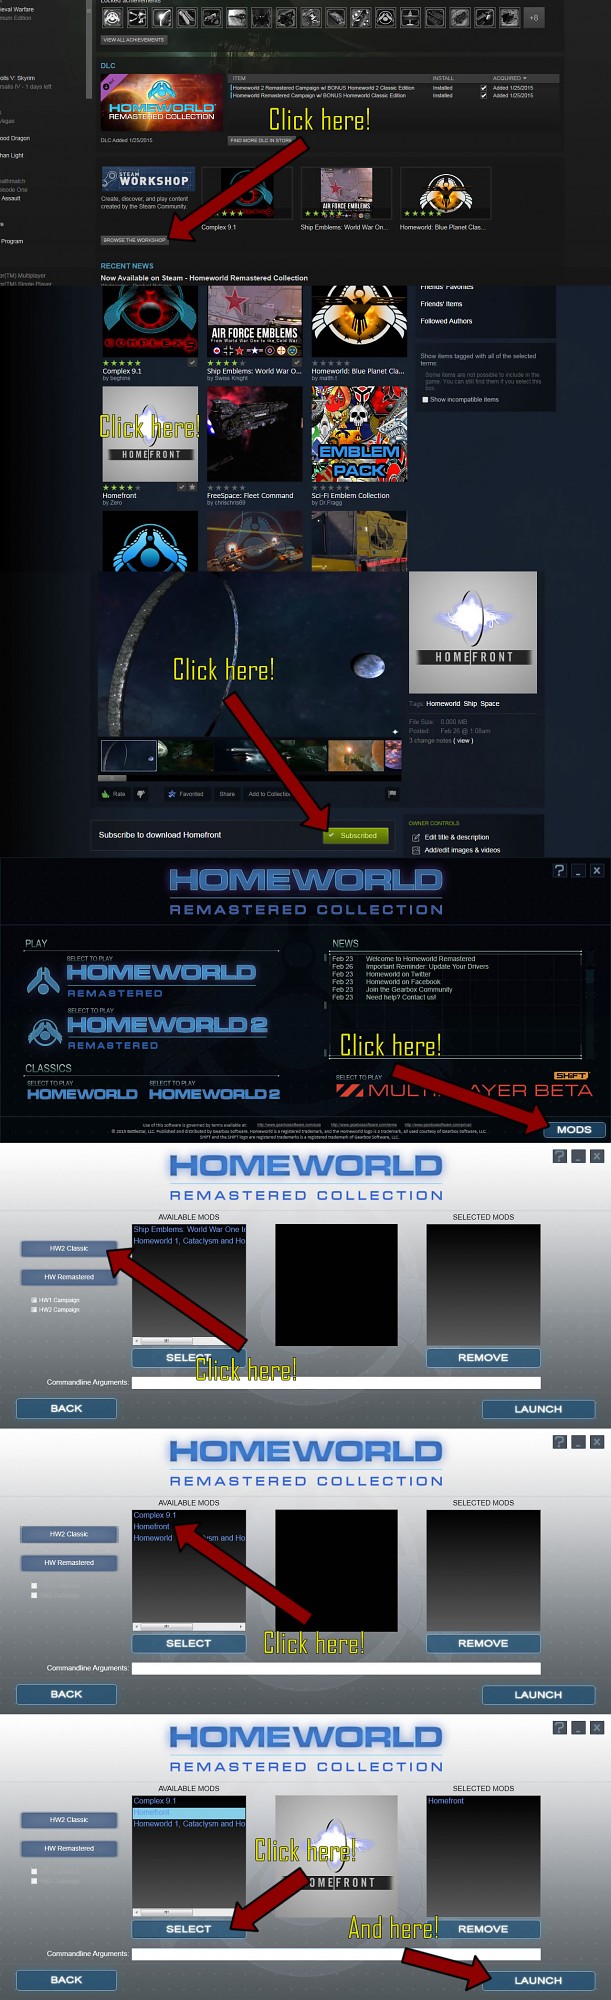 homeworld 2 remastered mods